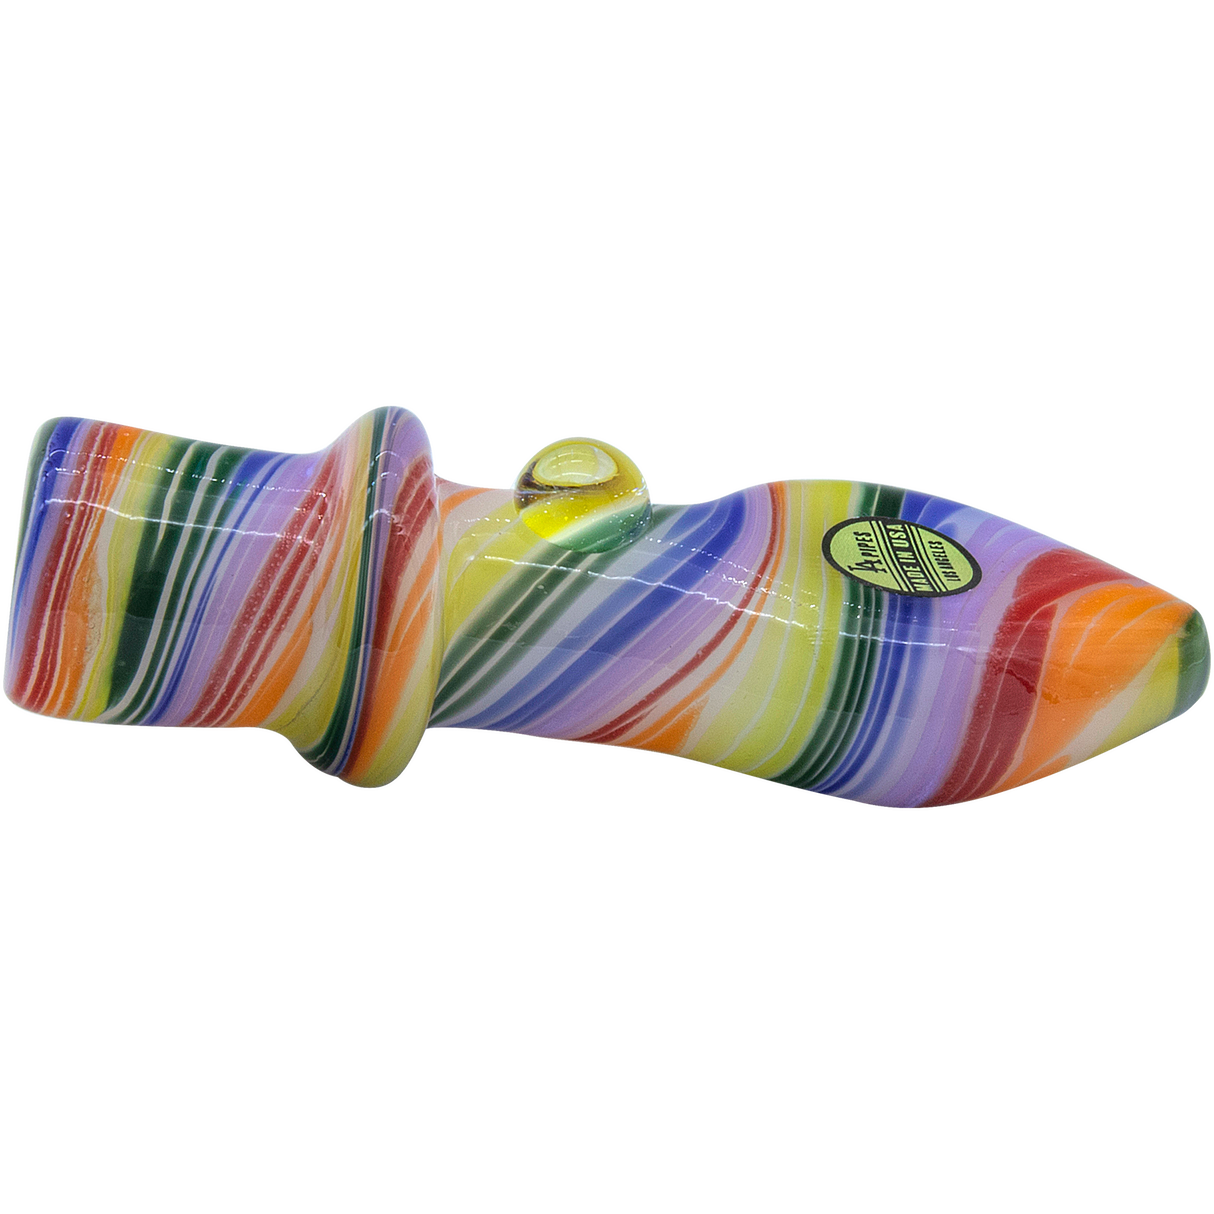 LA Pipes "Rainbow Tornado" Chillum Pipe - Colorful Borosilicate Glass, 3" Length, USA Made